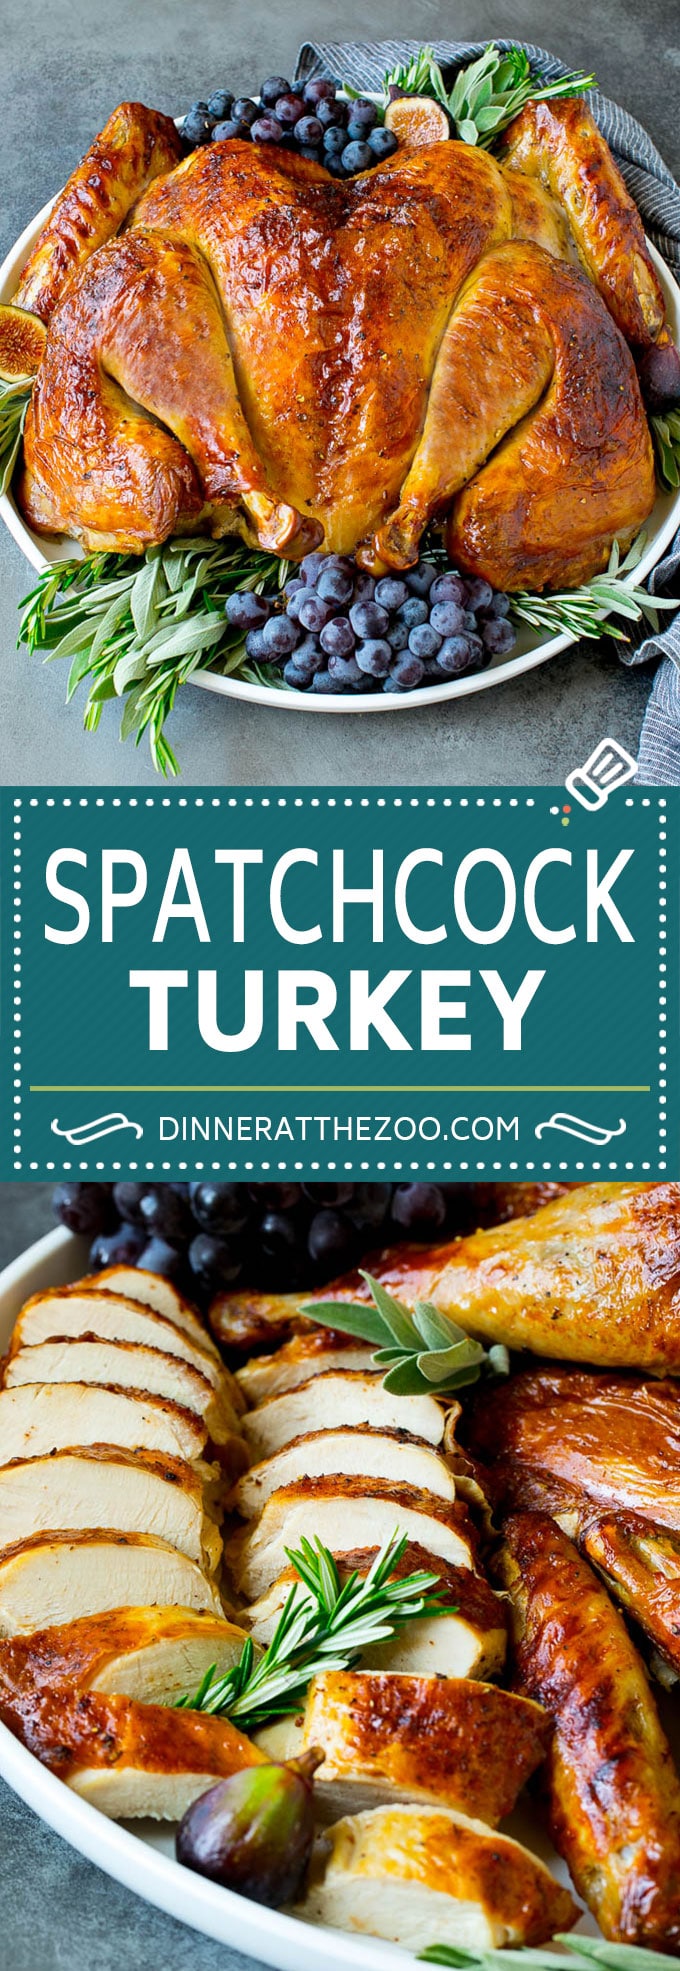 Spatchcock Turkey | Roasted Turkey | Thanksgiving Turkey #turkey #thanksgiving #dinner #fall #christmas #dinneratthezoo